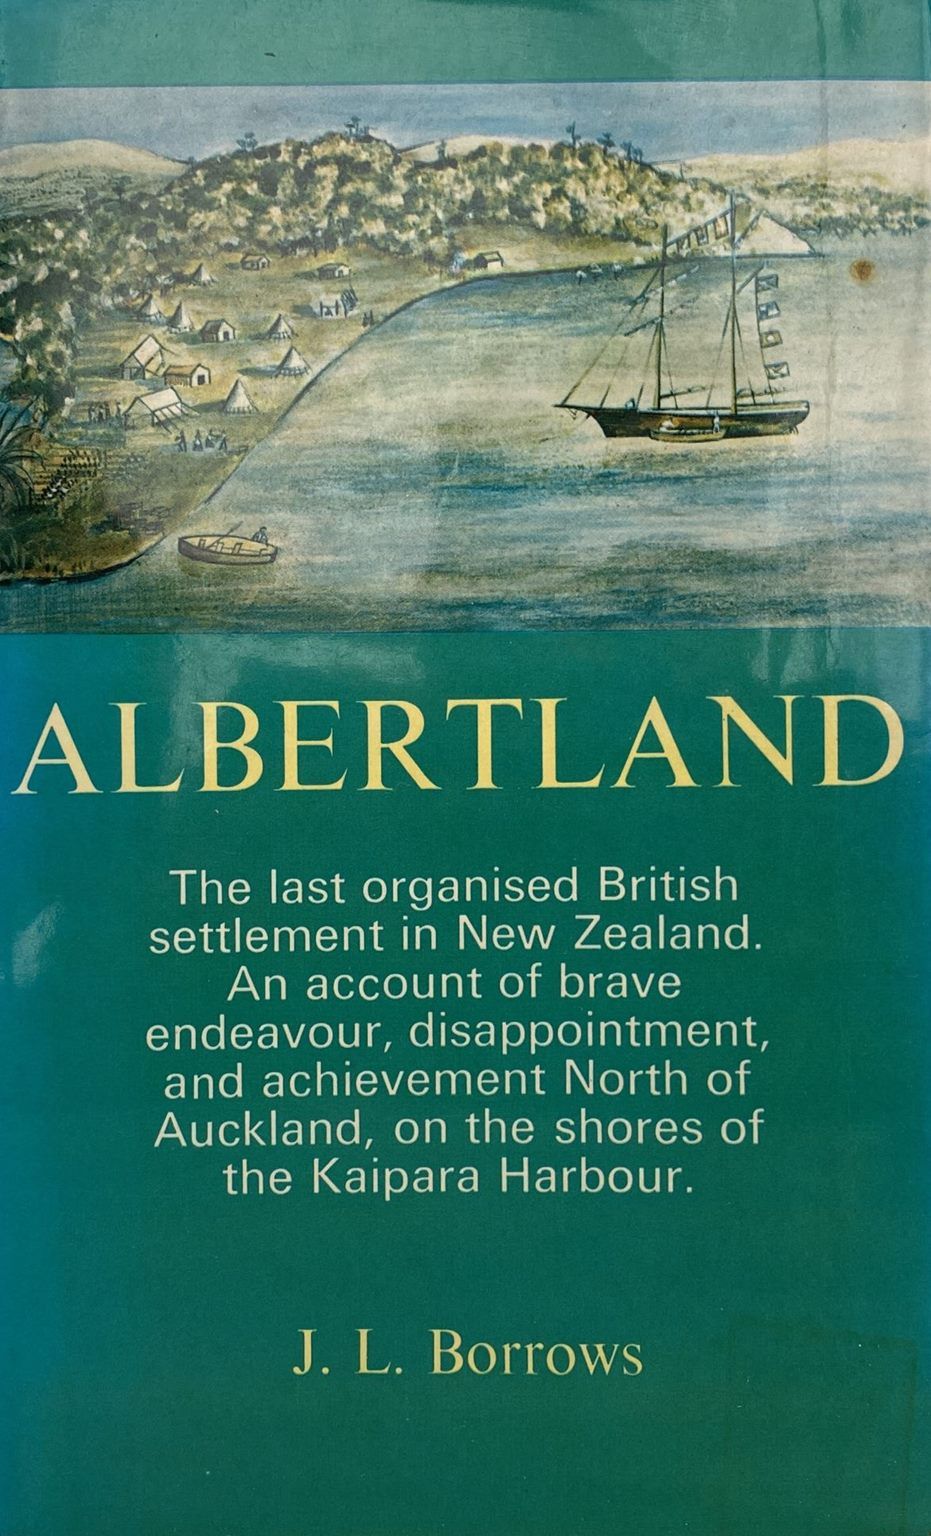 ALBERTLAND: The last organised British settlement in New Zealand